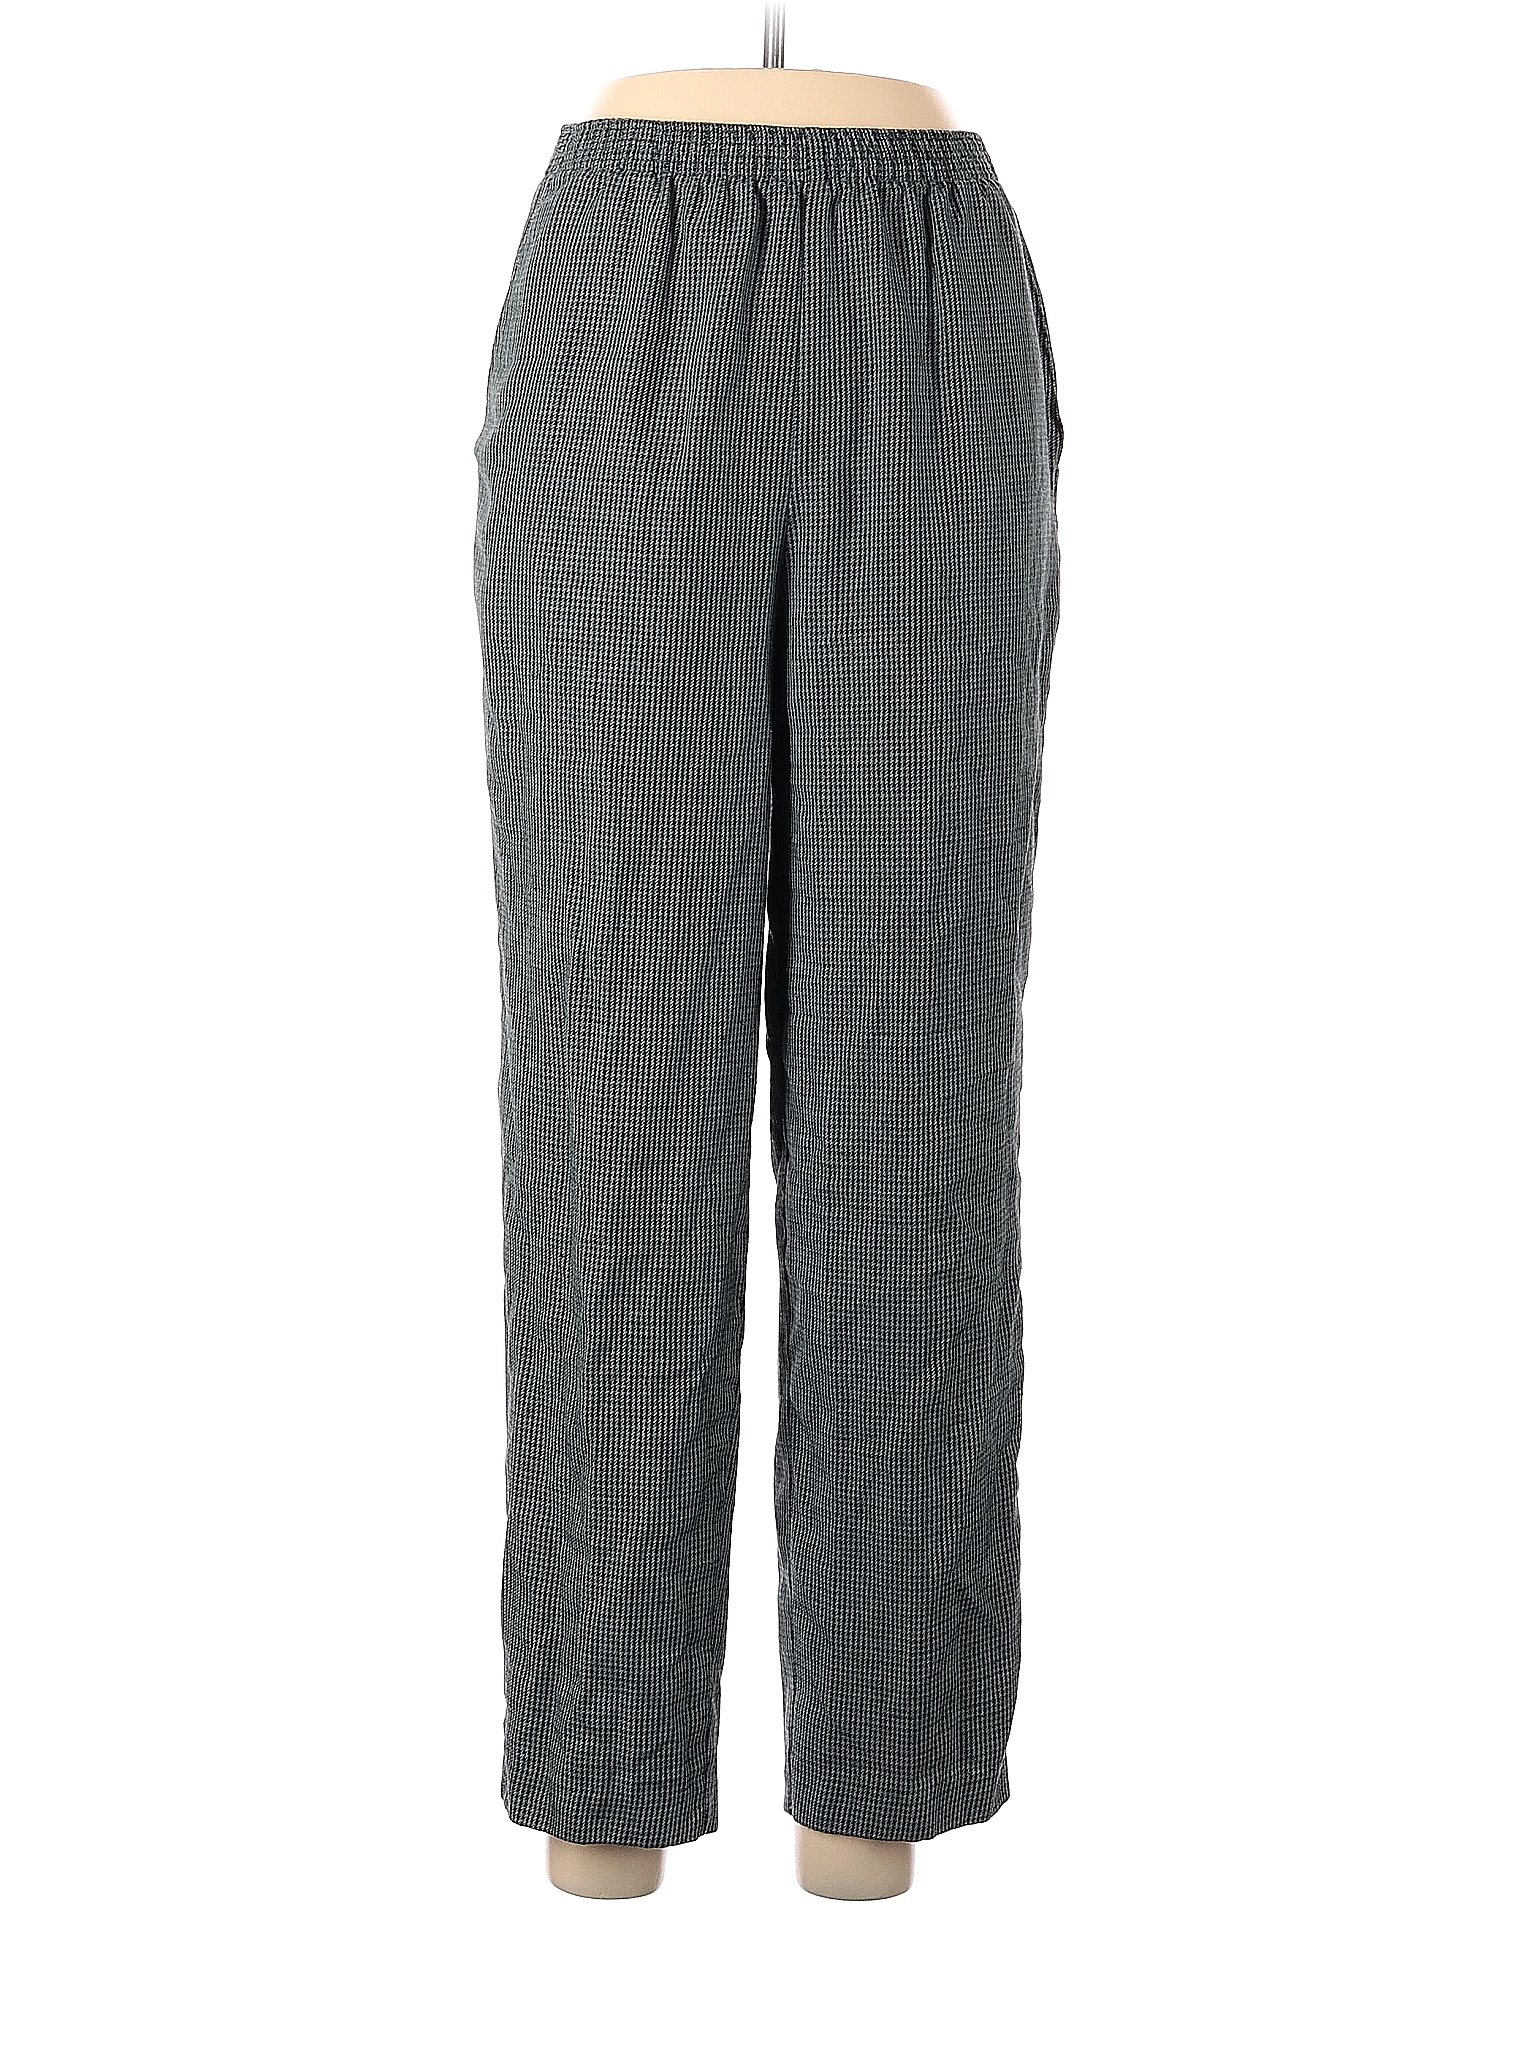 Bobbie Brooks Gray Teal Casual Pants Size 8 - 66% off | thredUP